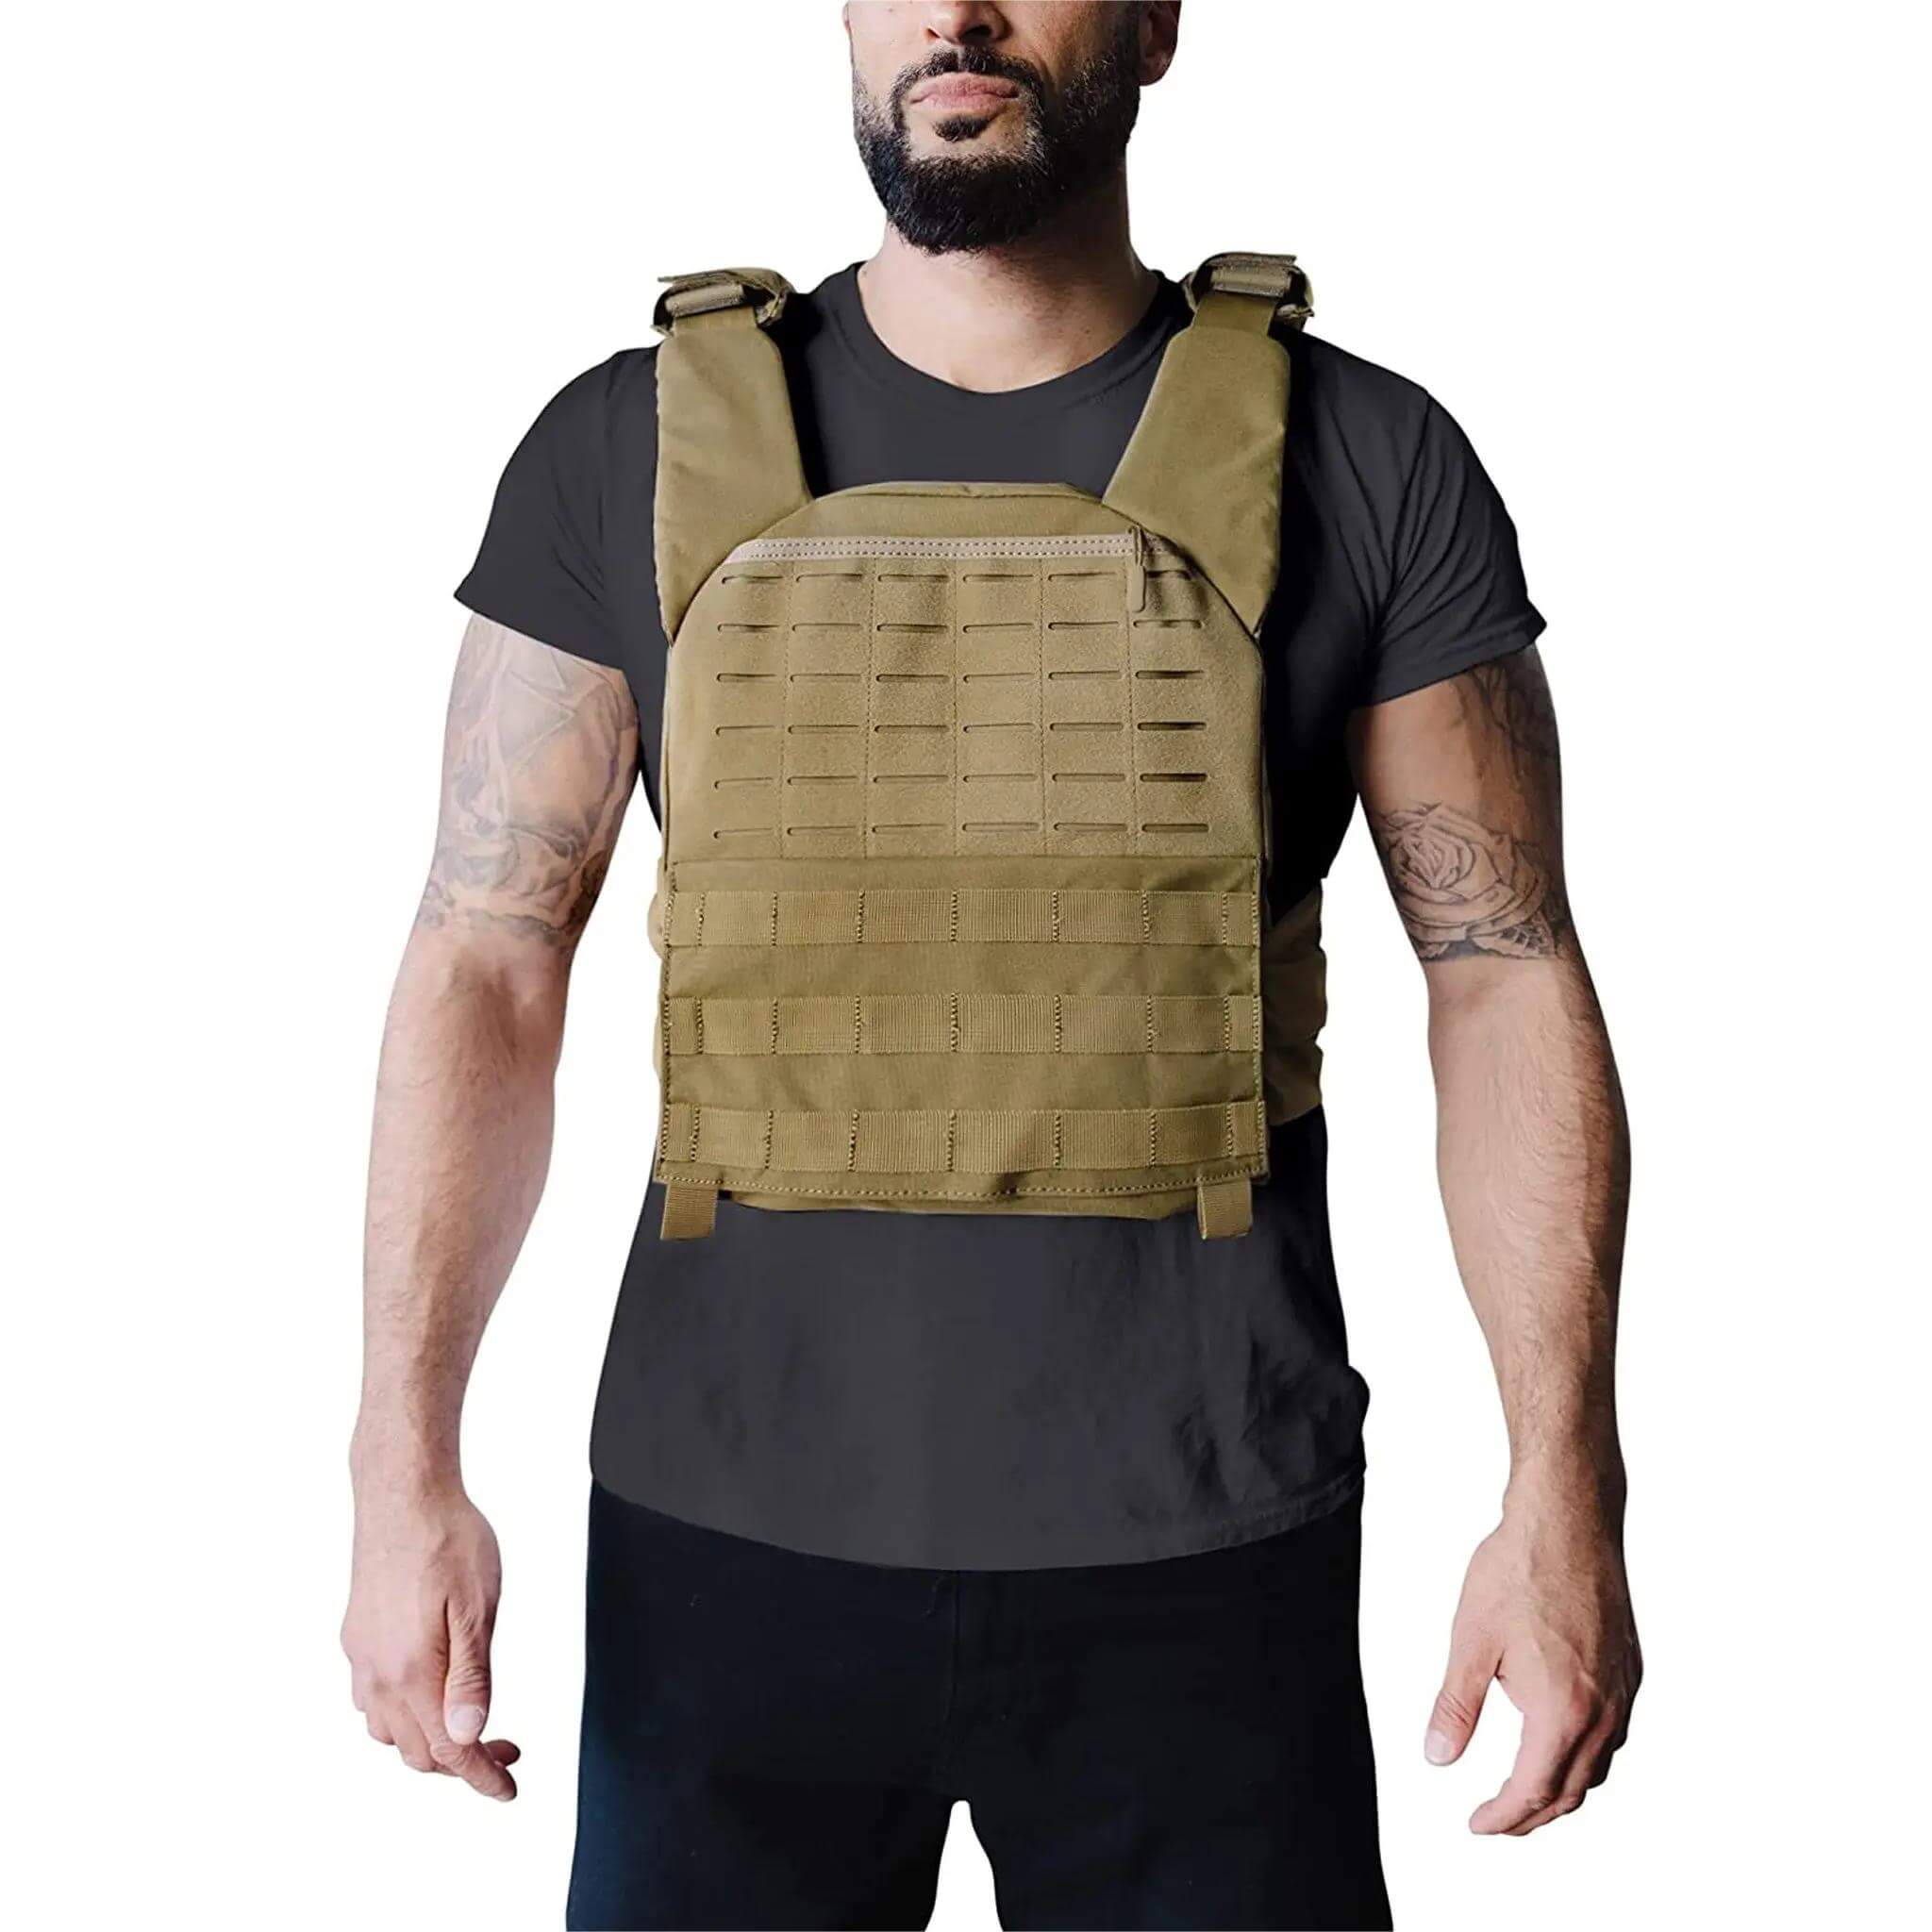 GLORYFIRE Weighted Vest Workout Ajustable Weight Vests Black GLORYFIRE®